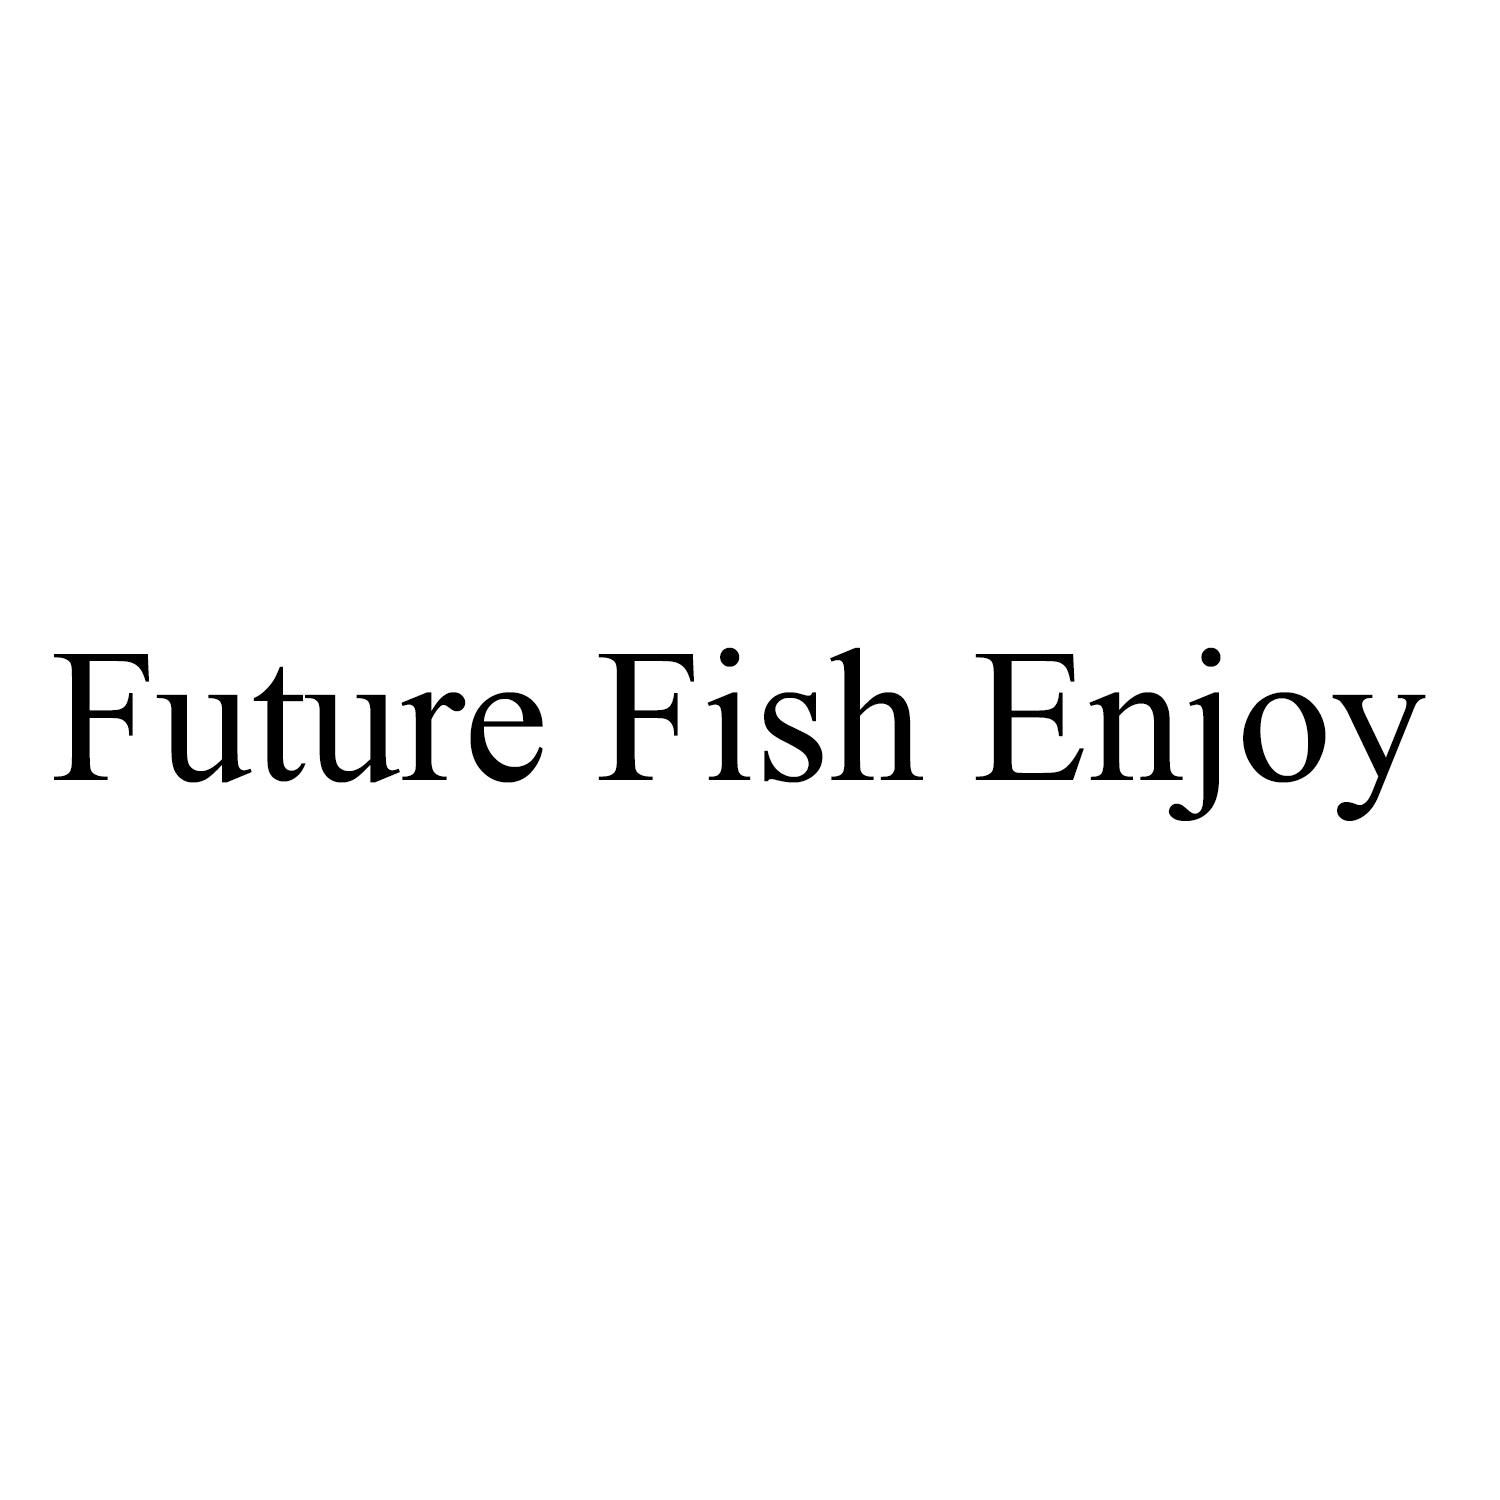 FUTURE FISH ENJOY